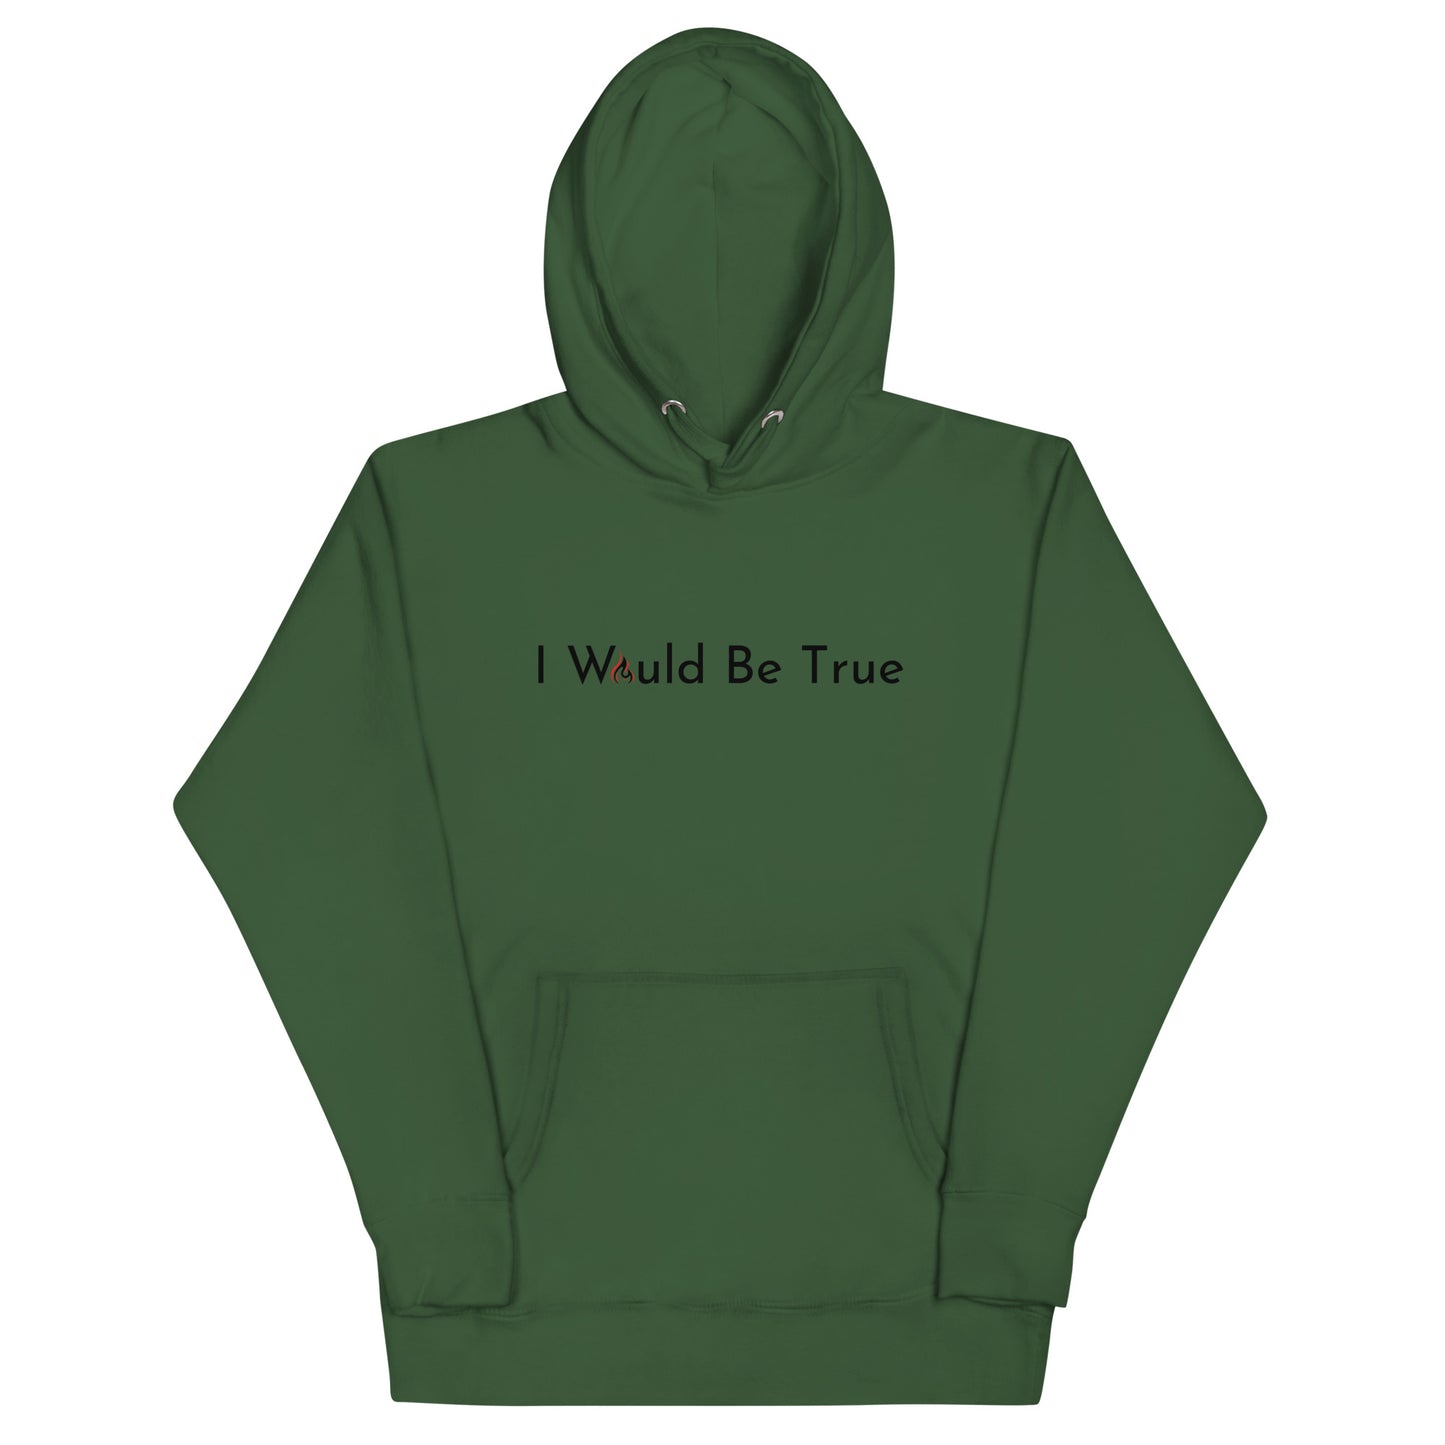 I Would Be True Sweatshirt